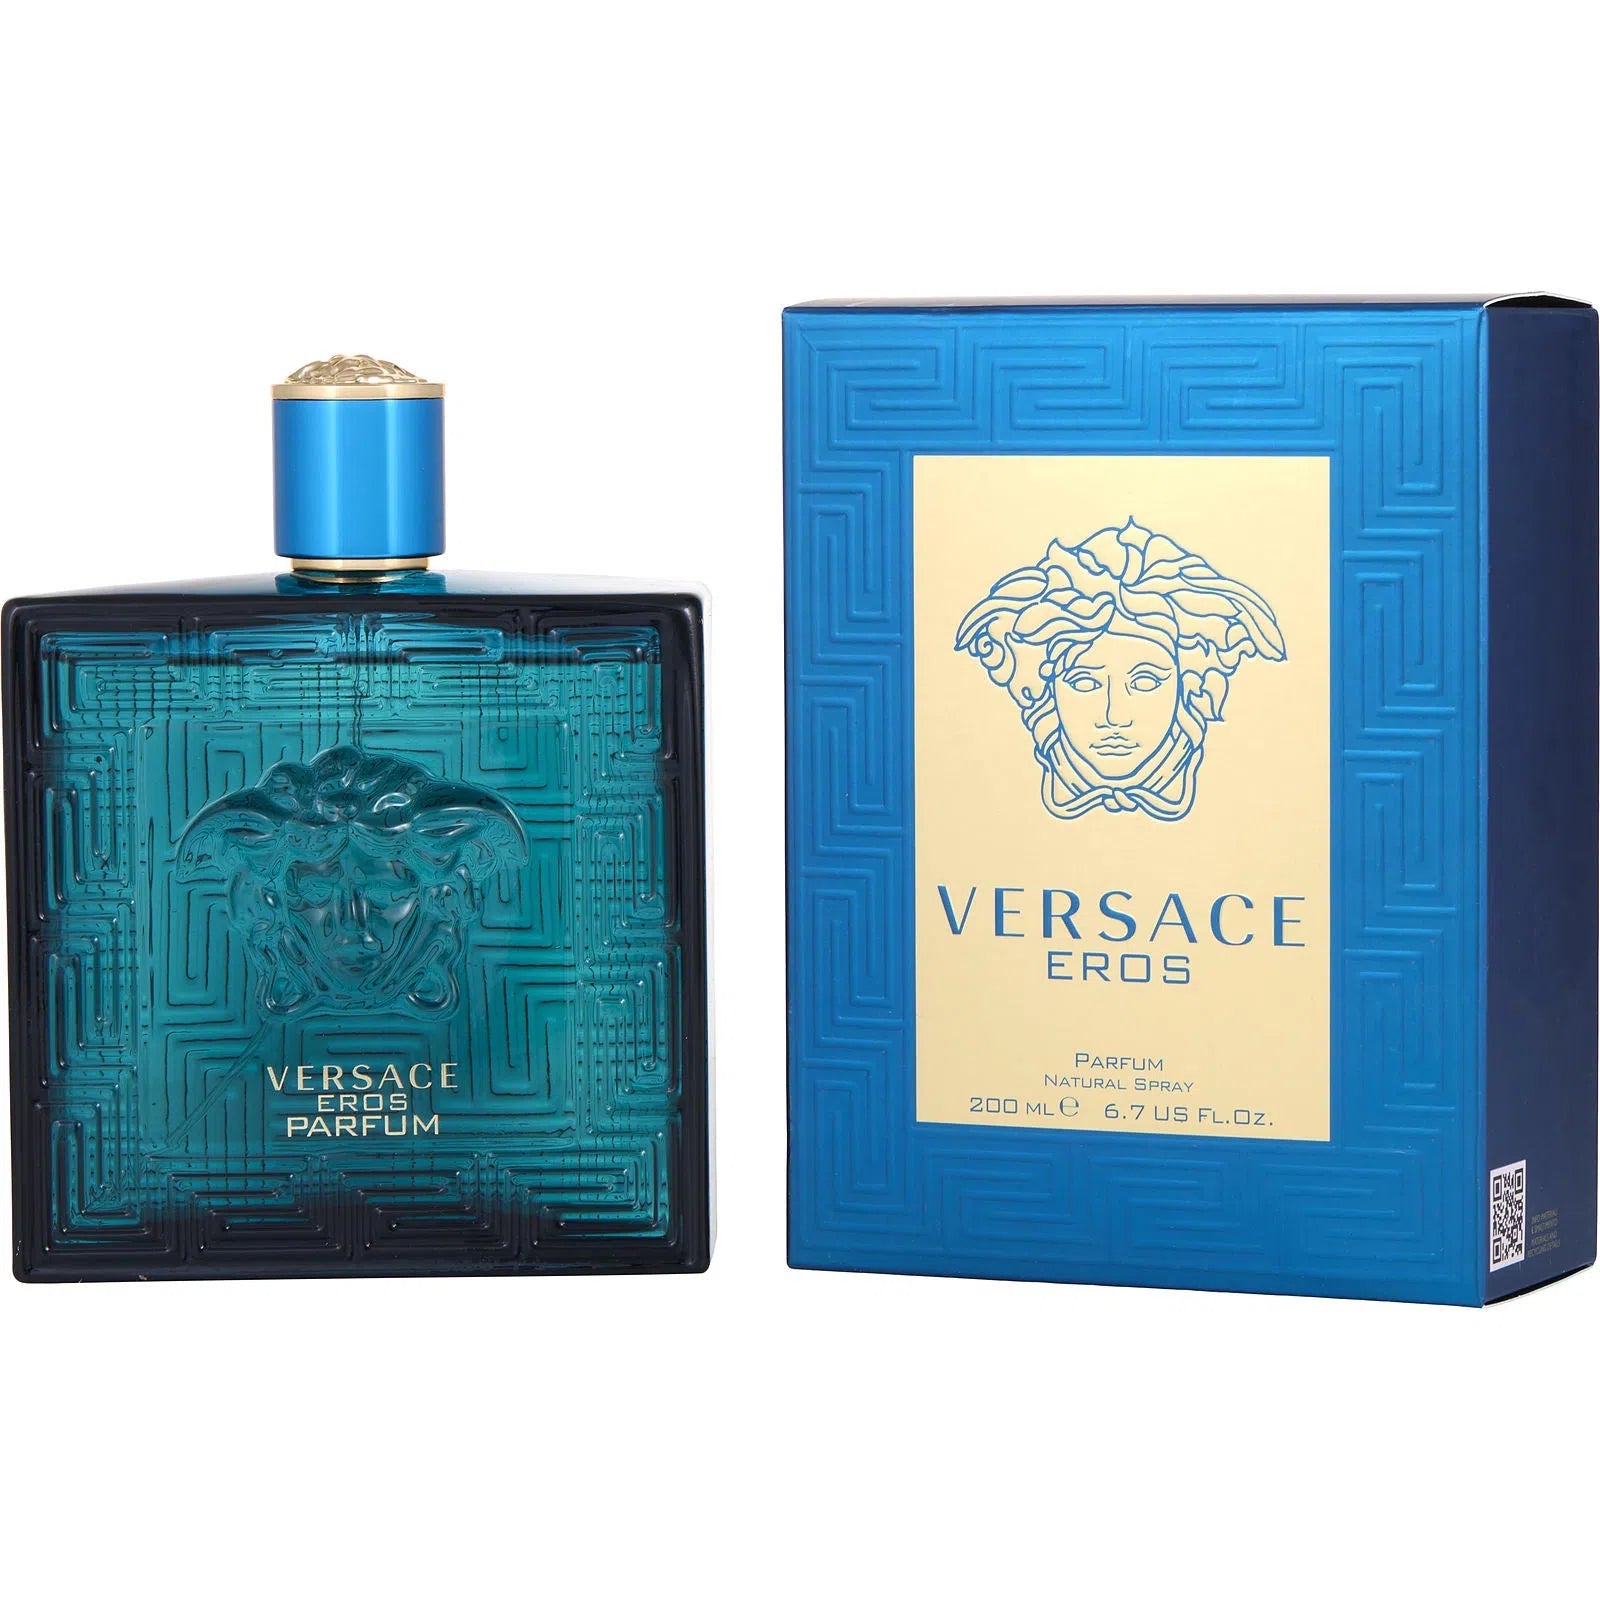 Perfume Versace Eros Parfum (M) / 200 ml - 8011003877904- Prive Perfumes Honduras